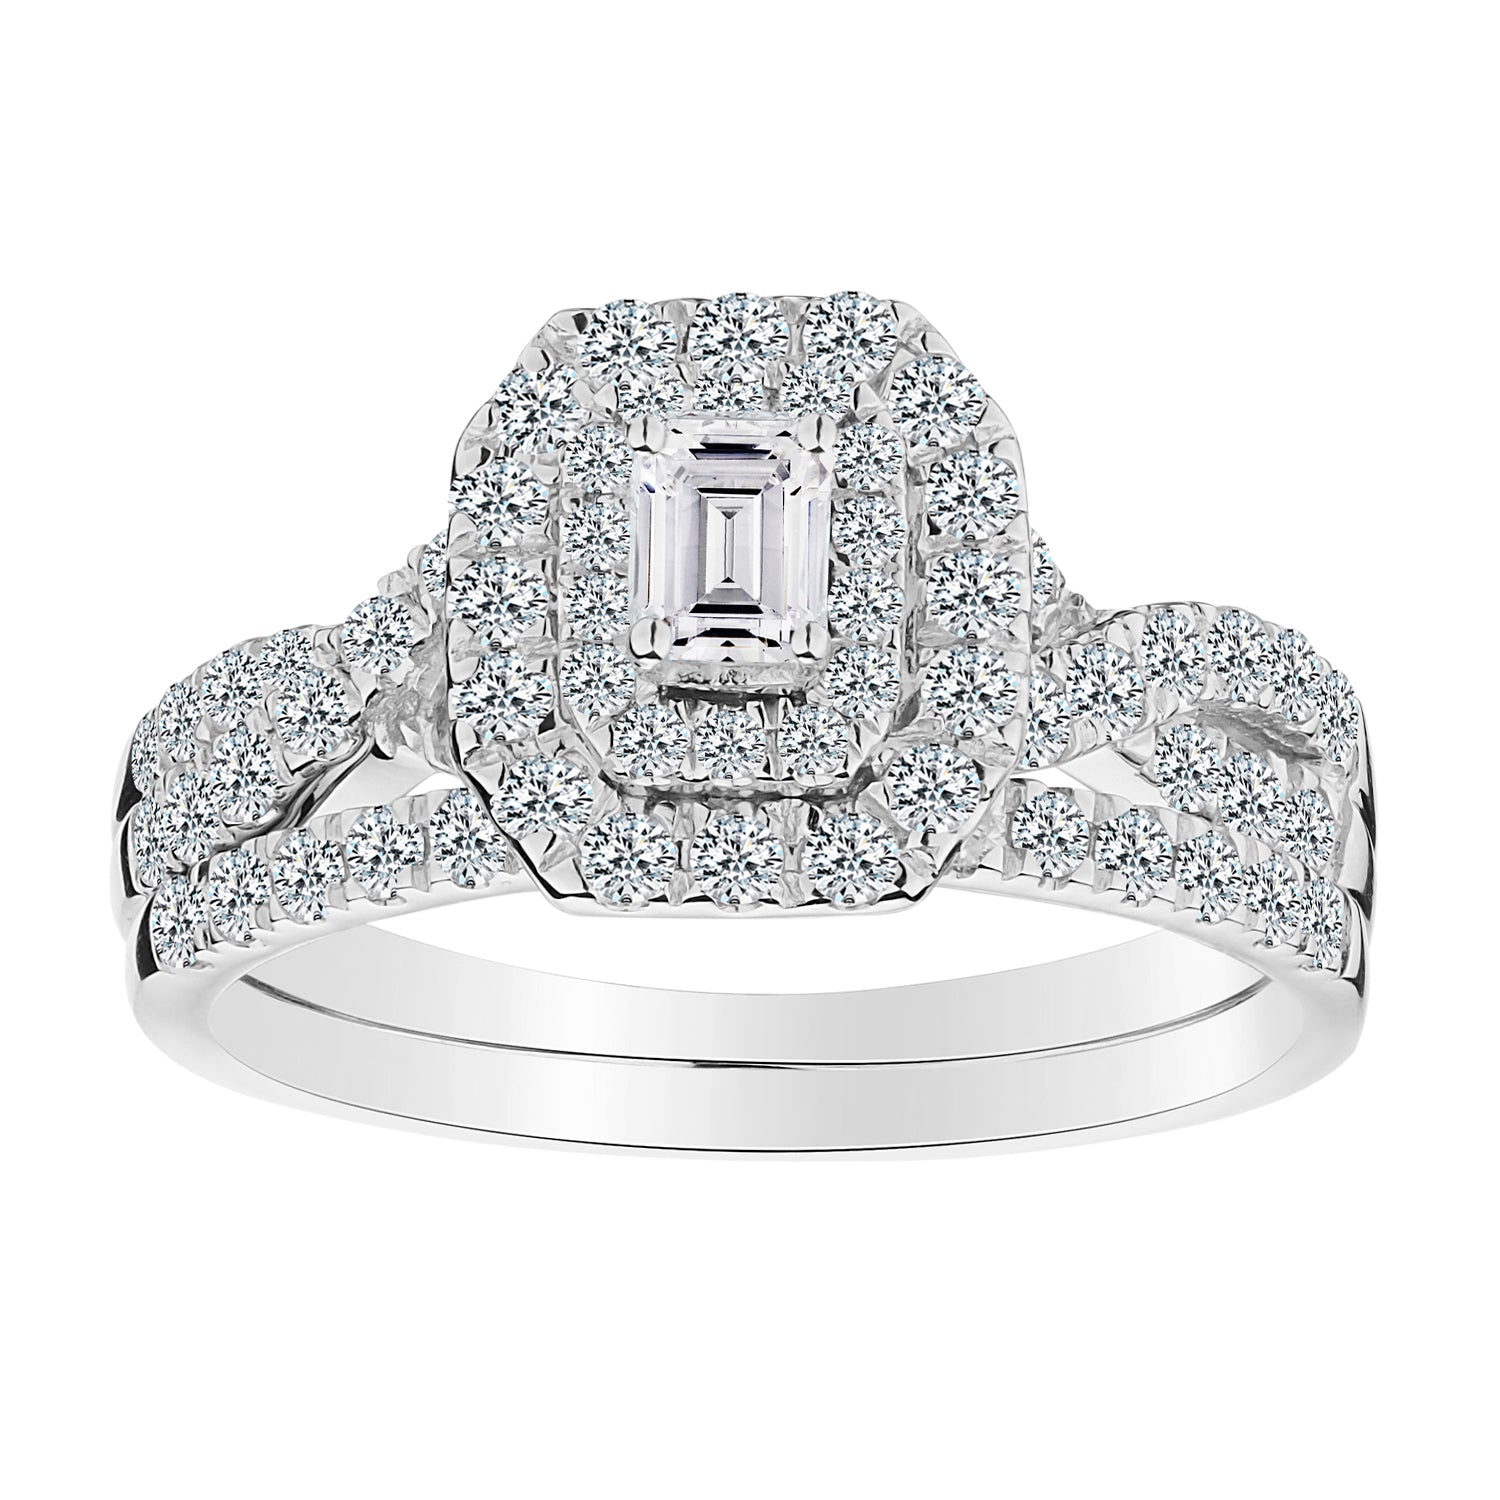 1.00 Carat Emerald Cut Centre Diamond Ring Set,  14kt White Gold. Griffin Jewellery Designs